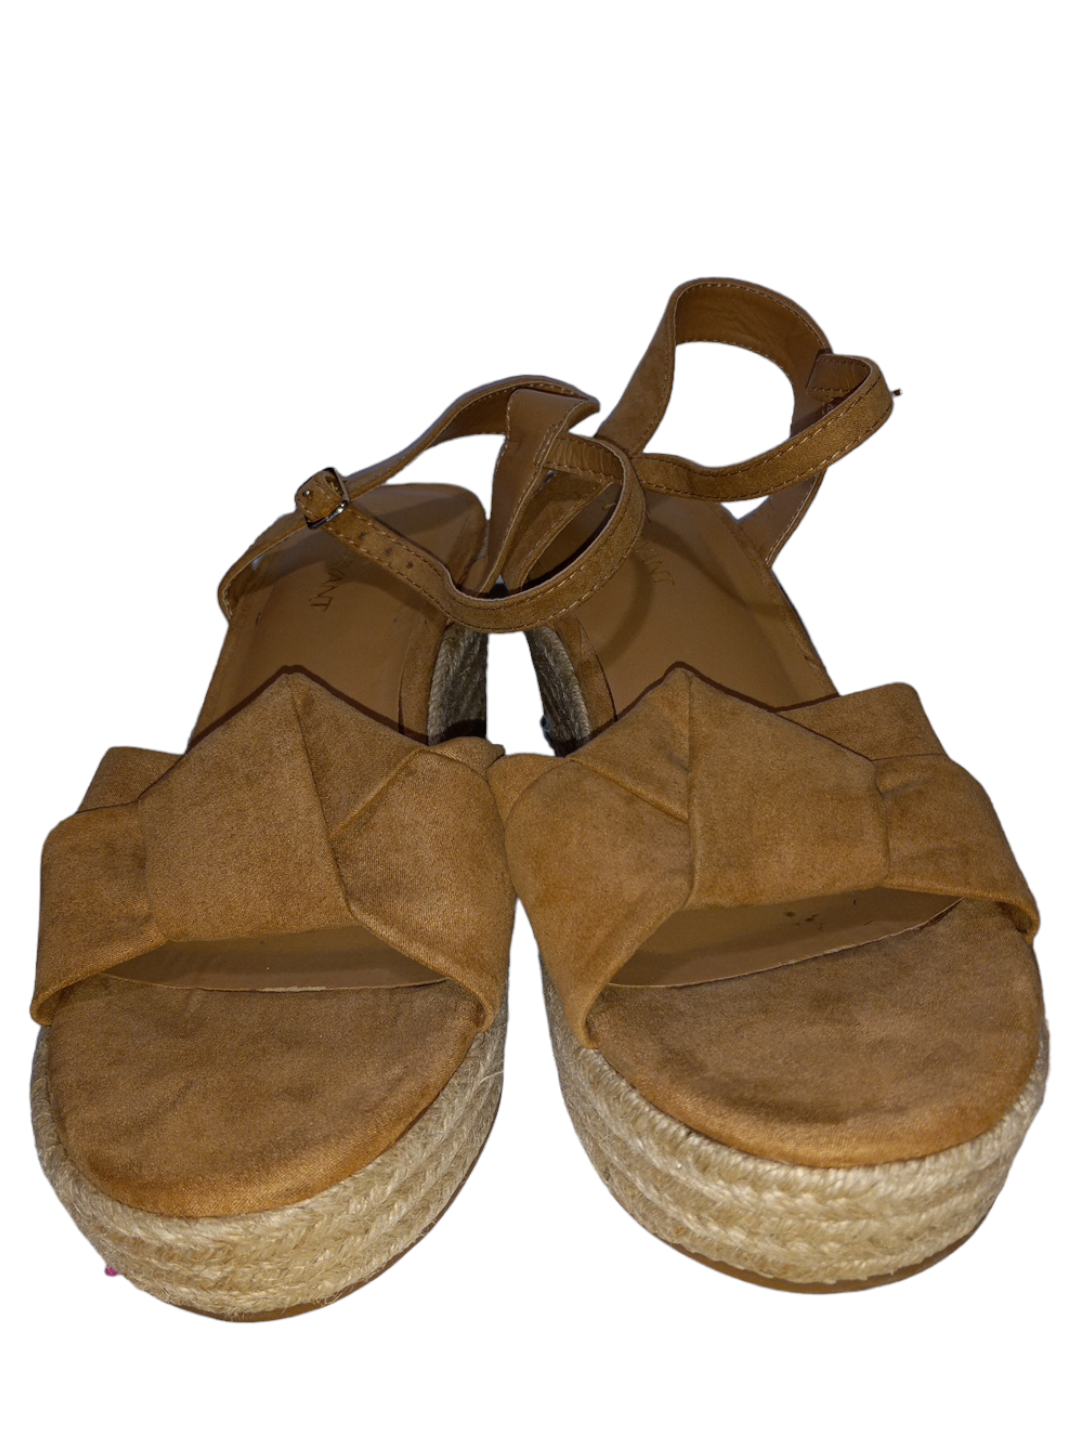 Tan Sandals Flats Lane Bryant, Size 9